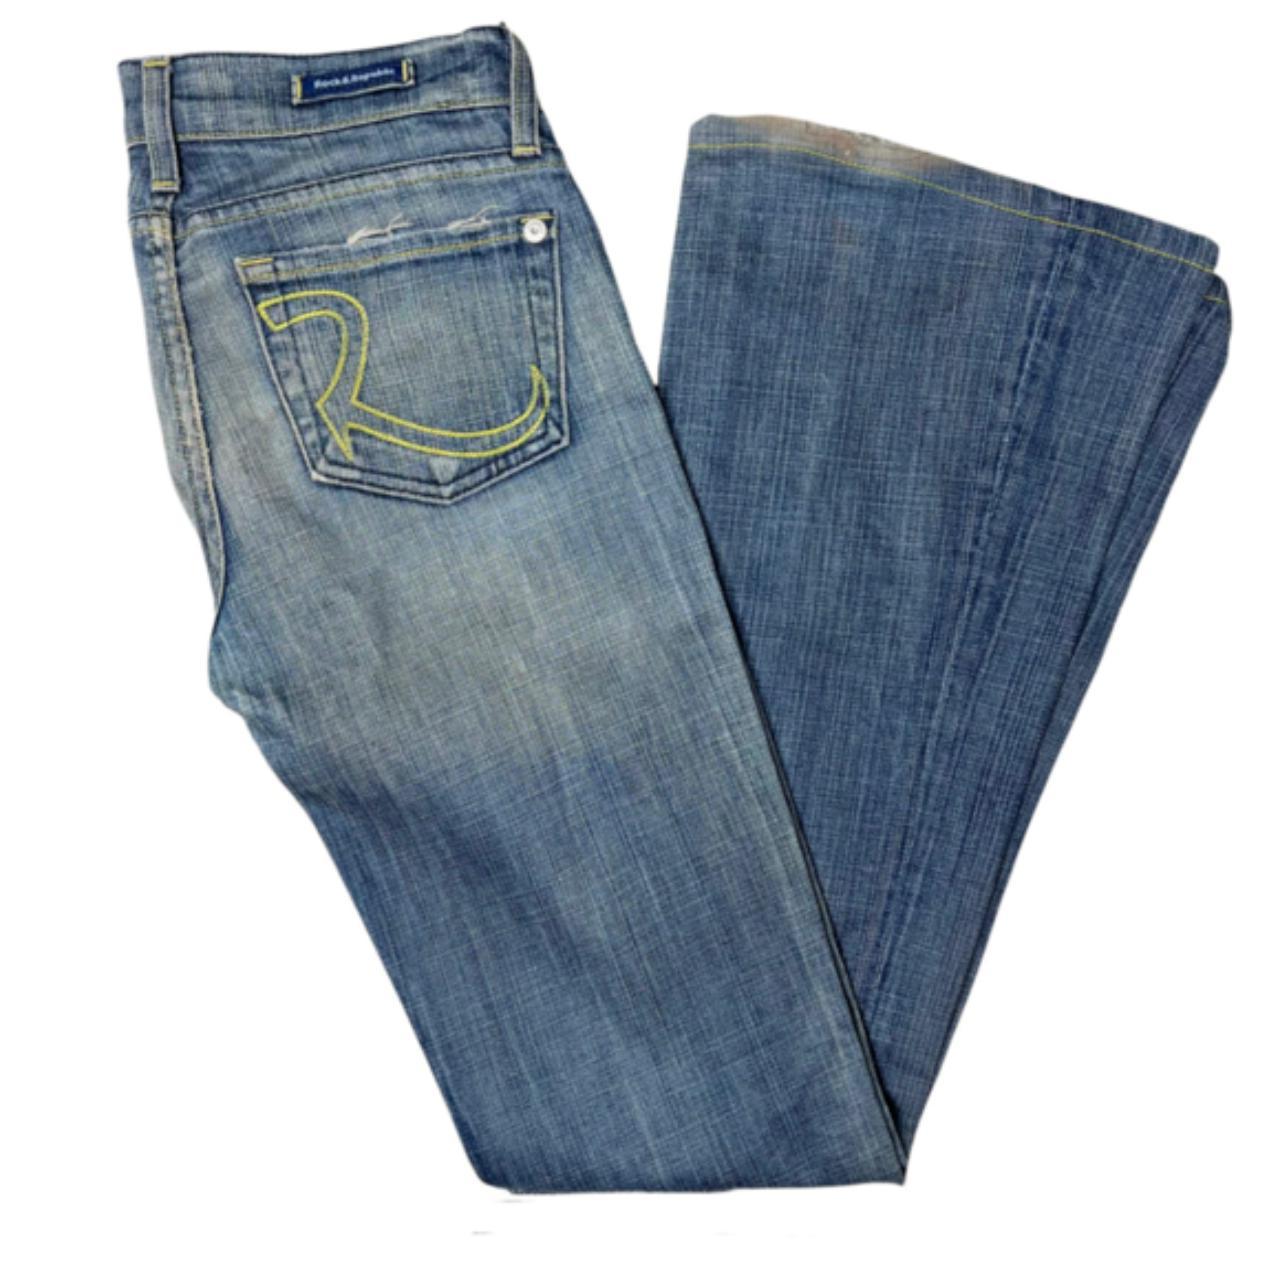 Product Image 1 - Rock & Republic Bootcut Jeans
pre